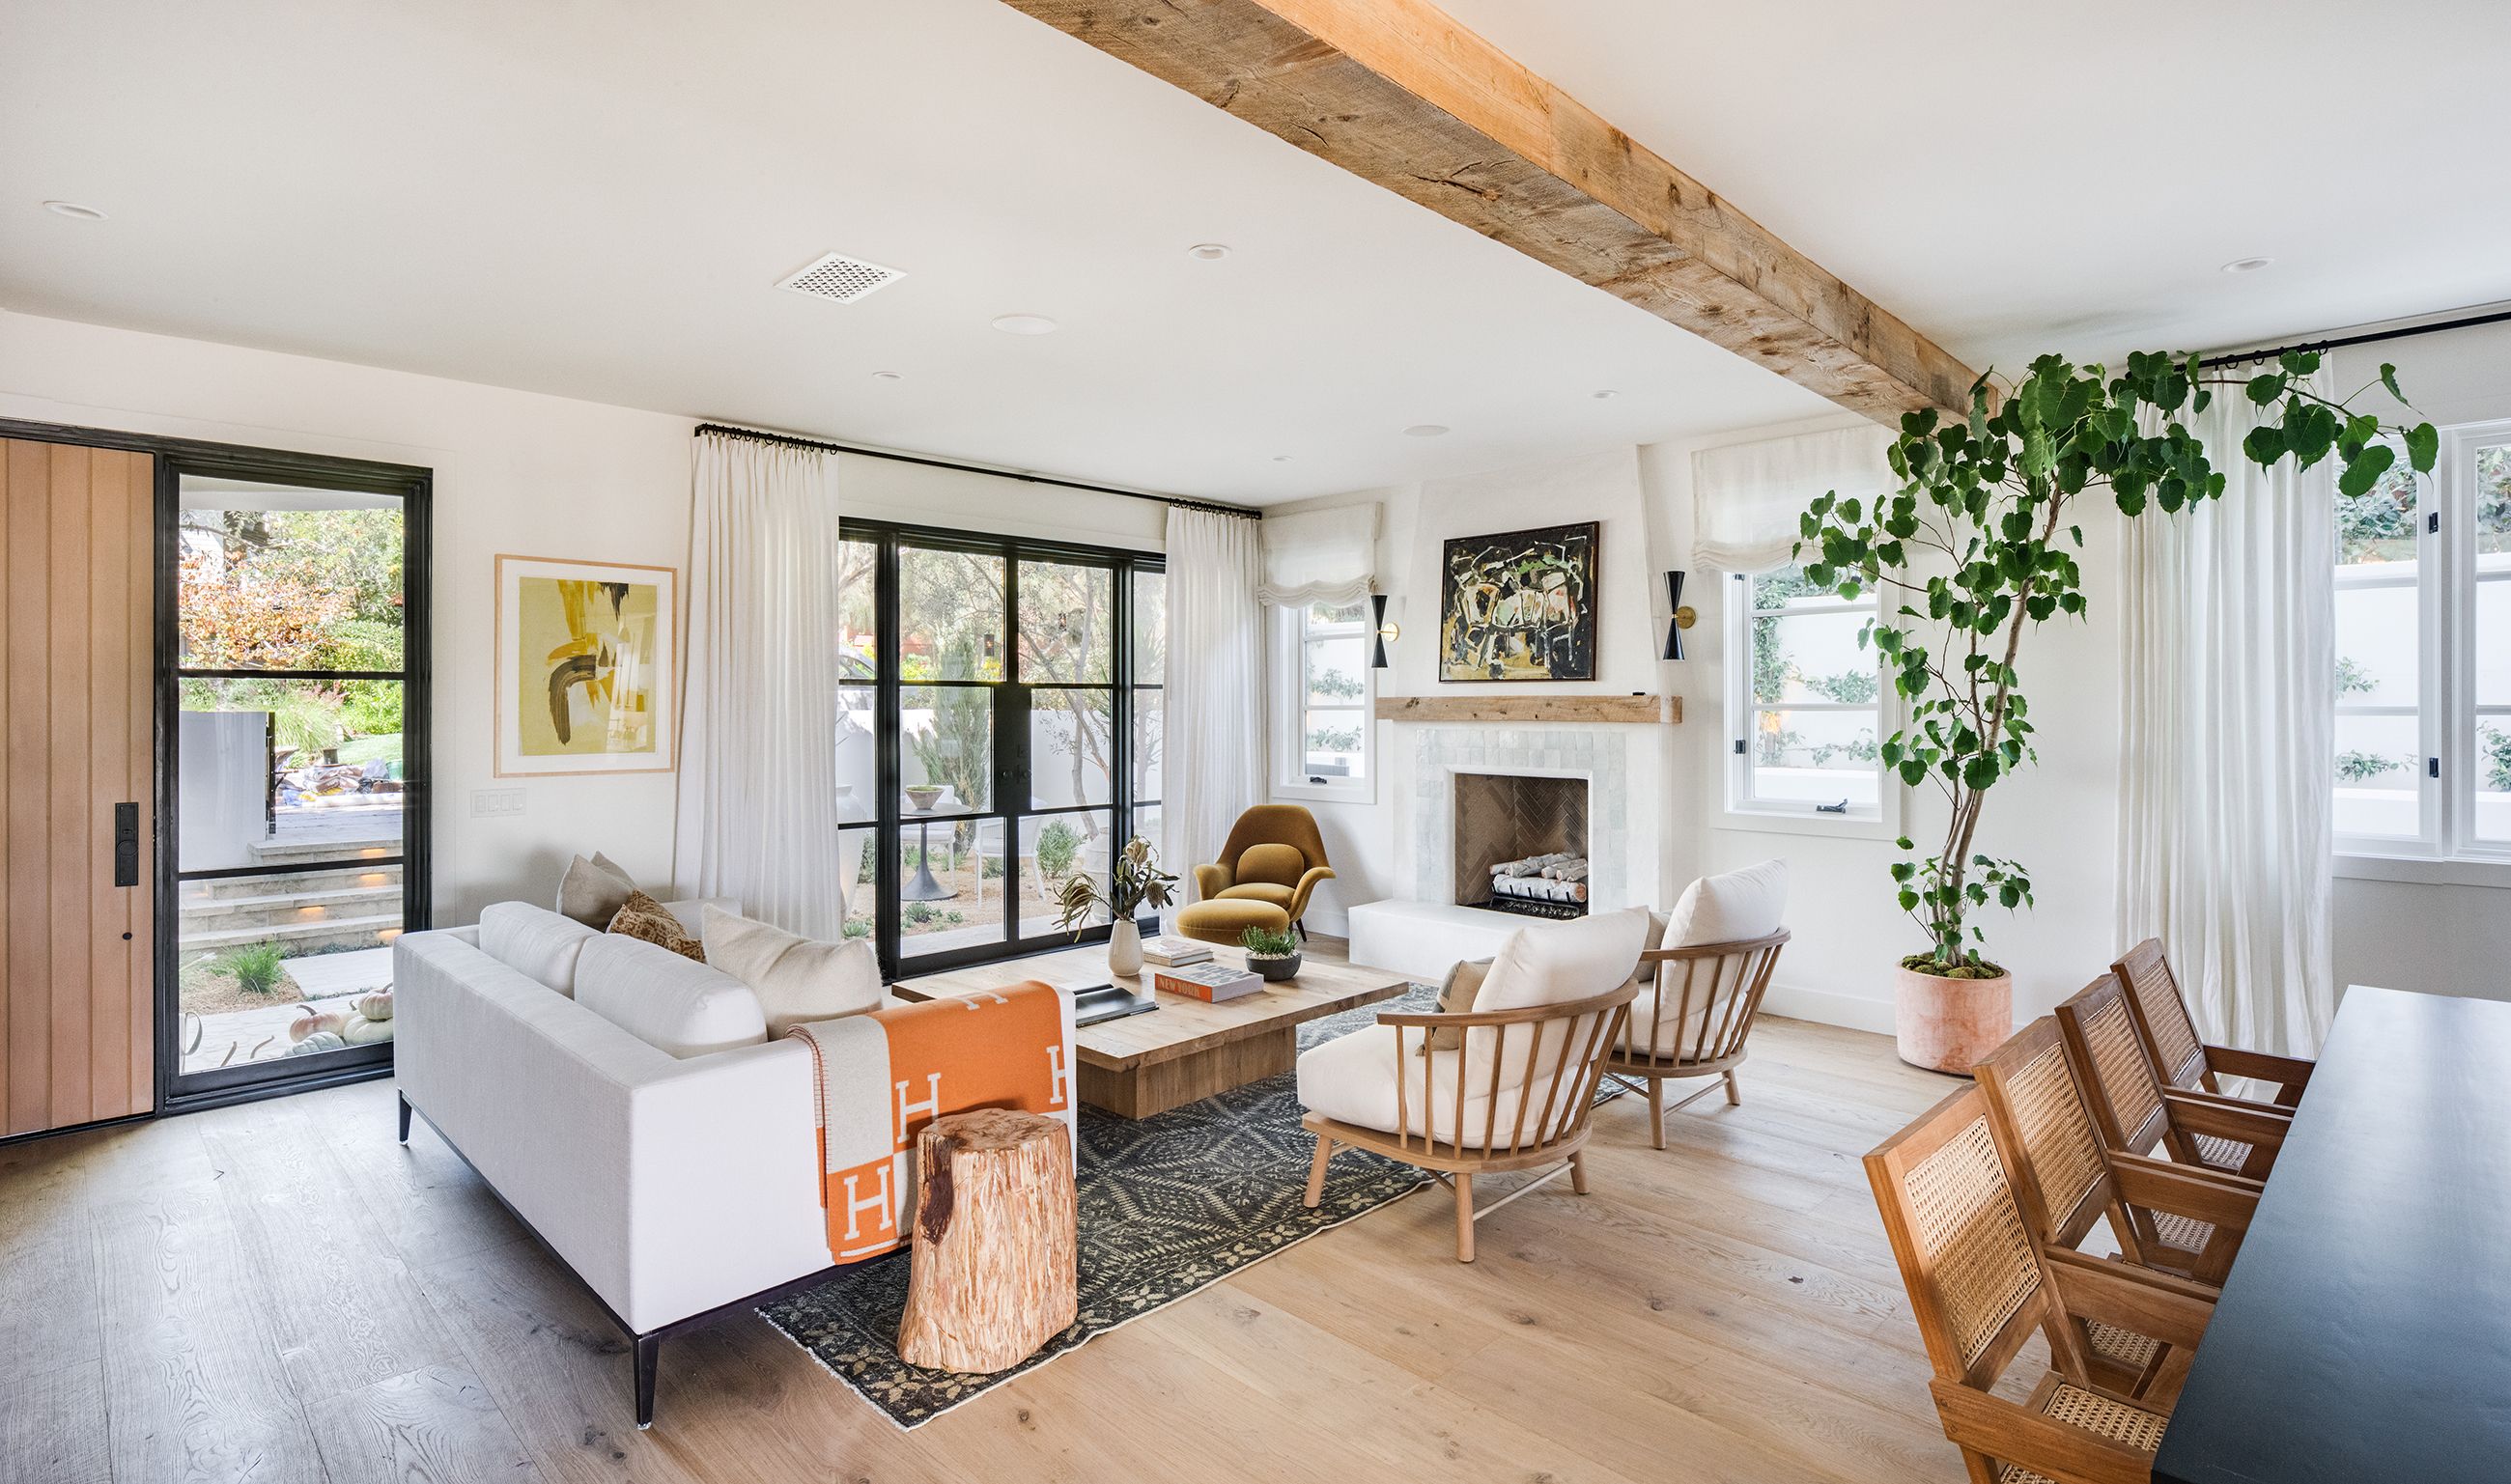 70 Stunning Living Room Ideas Chic, Modern Home Living Room